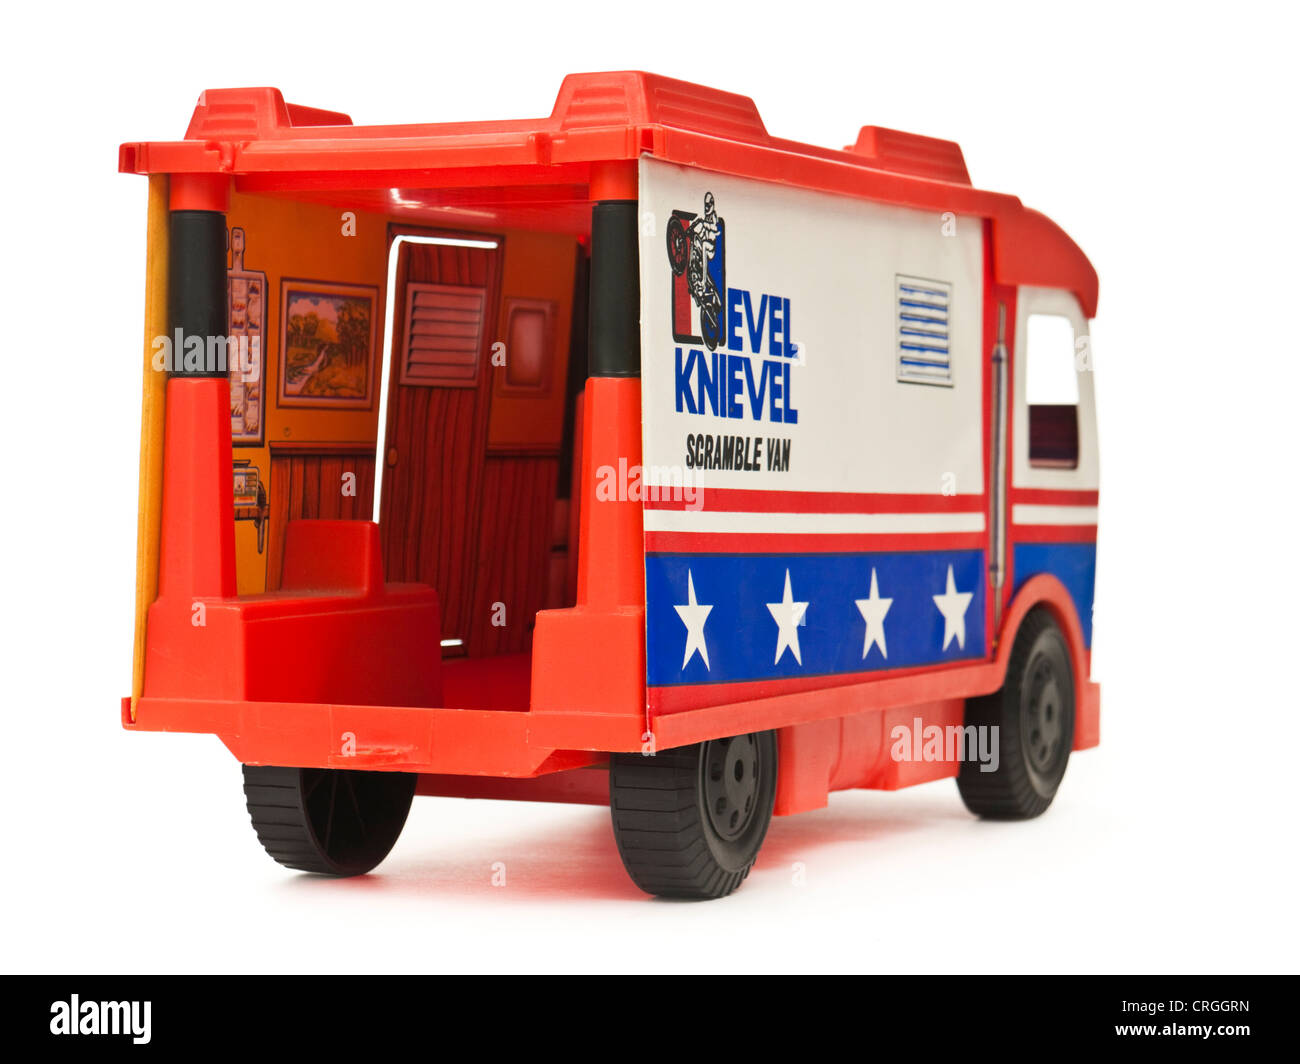 1973 Evel Knievel 'Scramble Van' von Ideal toy Stockfoto